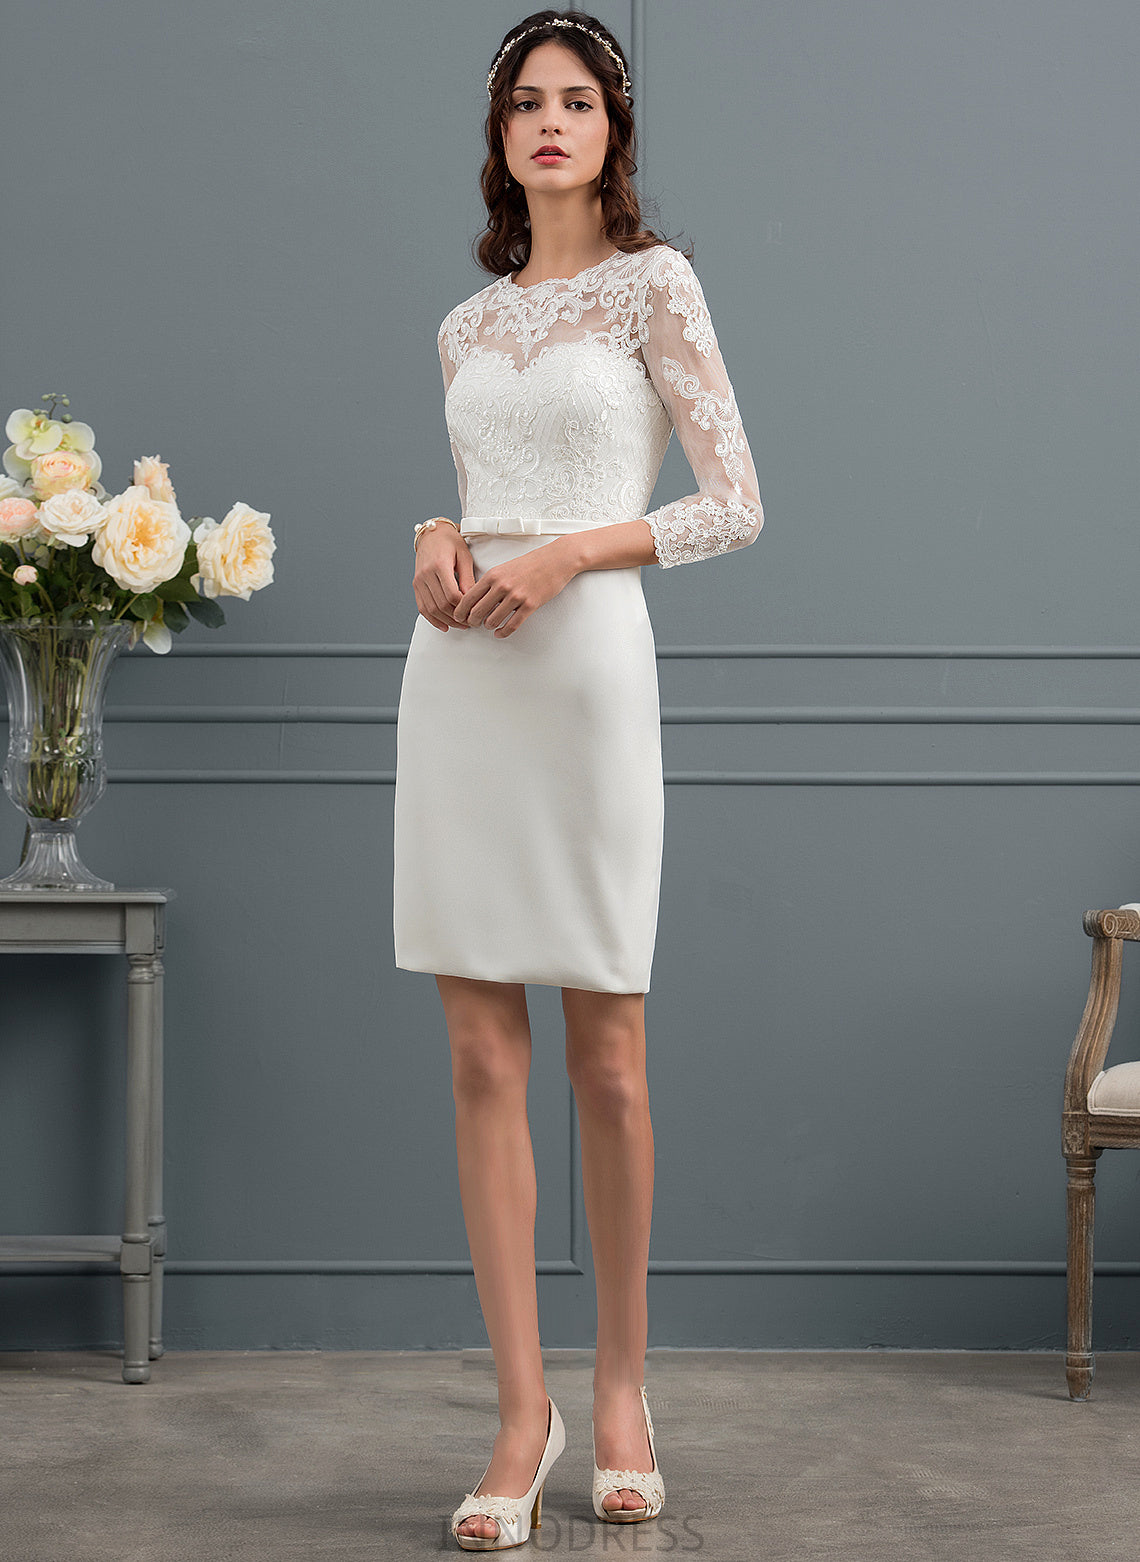 Sheath/Column Bow(s) Wedding Dresses Marisol Crepe Stretch With Knee-Length Illusion Sequins Dress Wedding